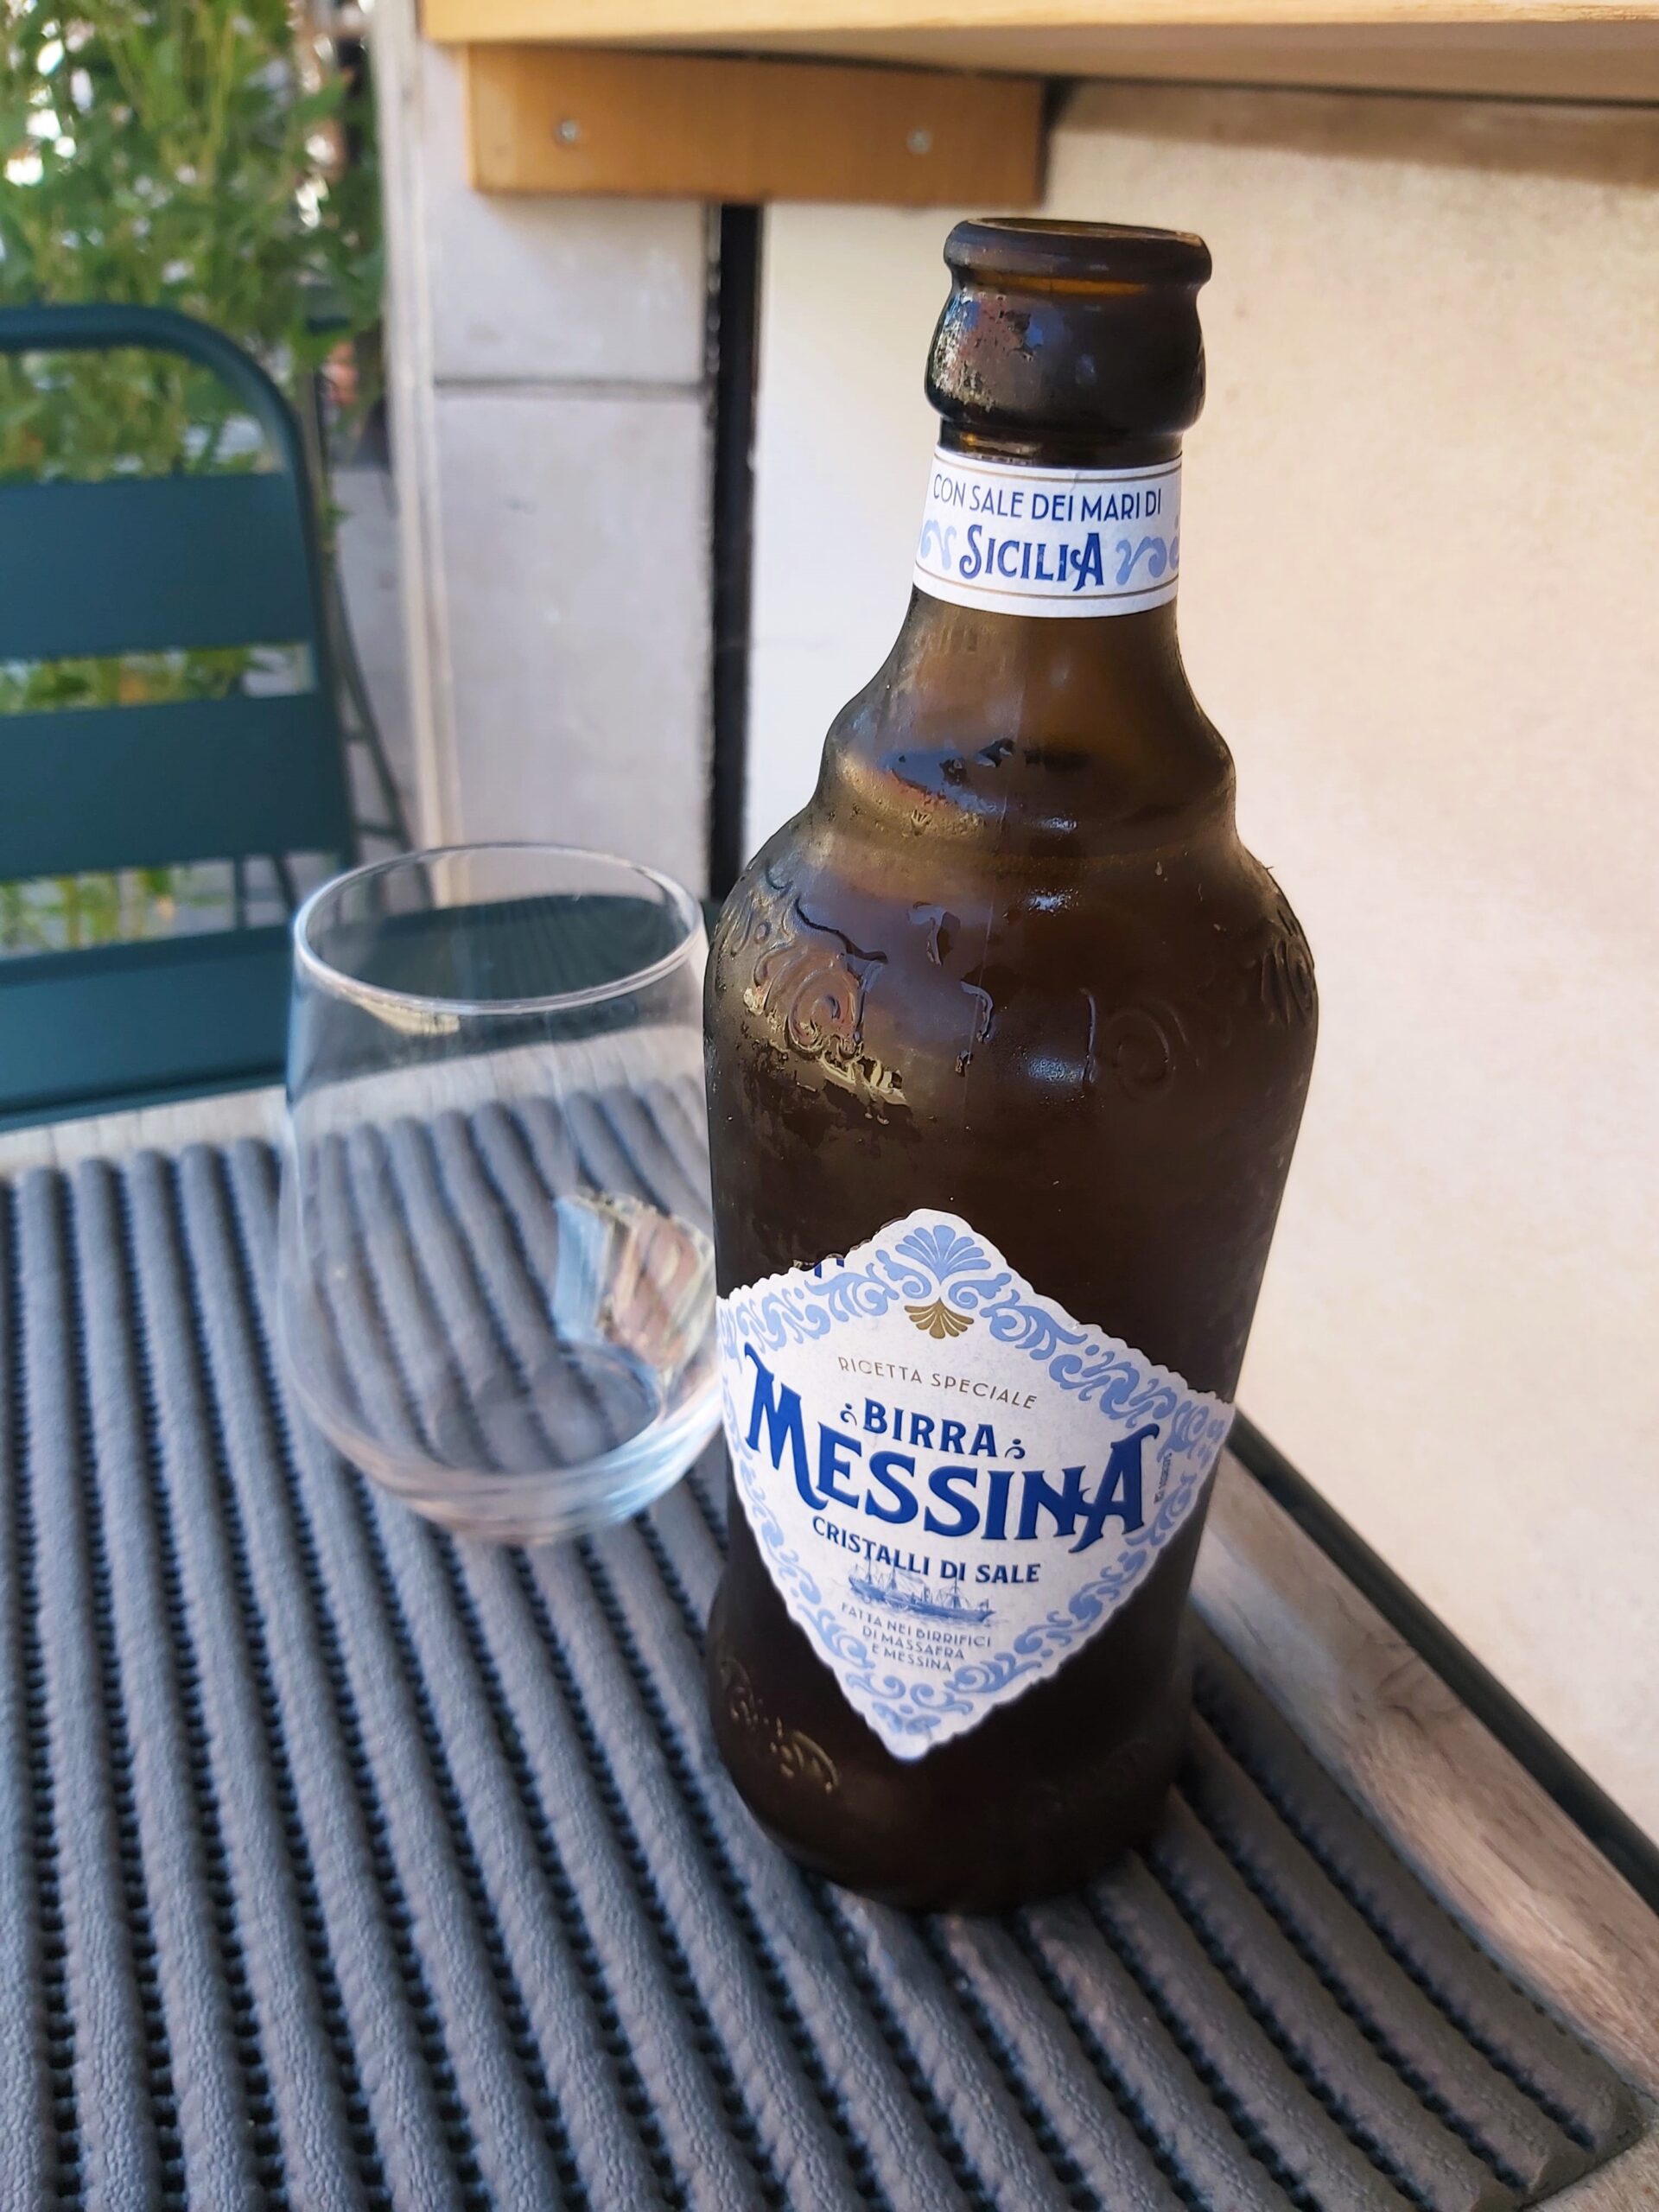 Messina Birra bottle in Mestre, Italy at Tasty Poke restaurant